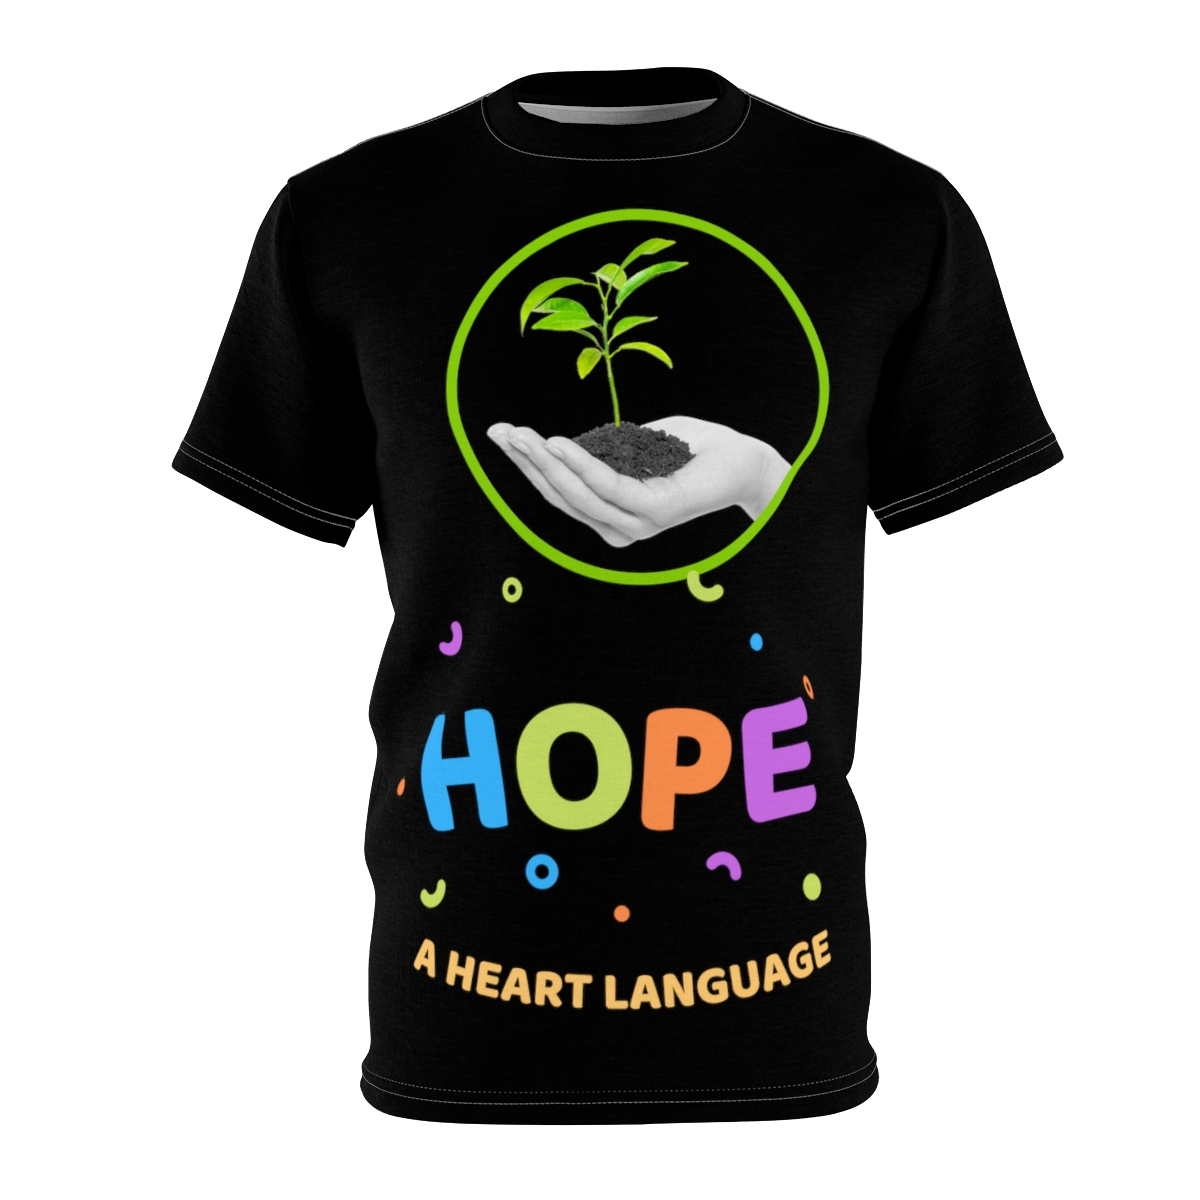 HOPE  A Heart Language product thumbnail image